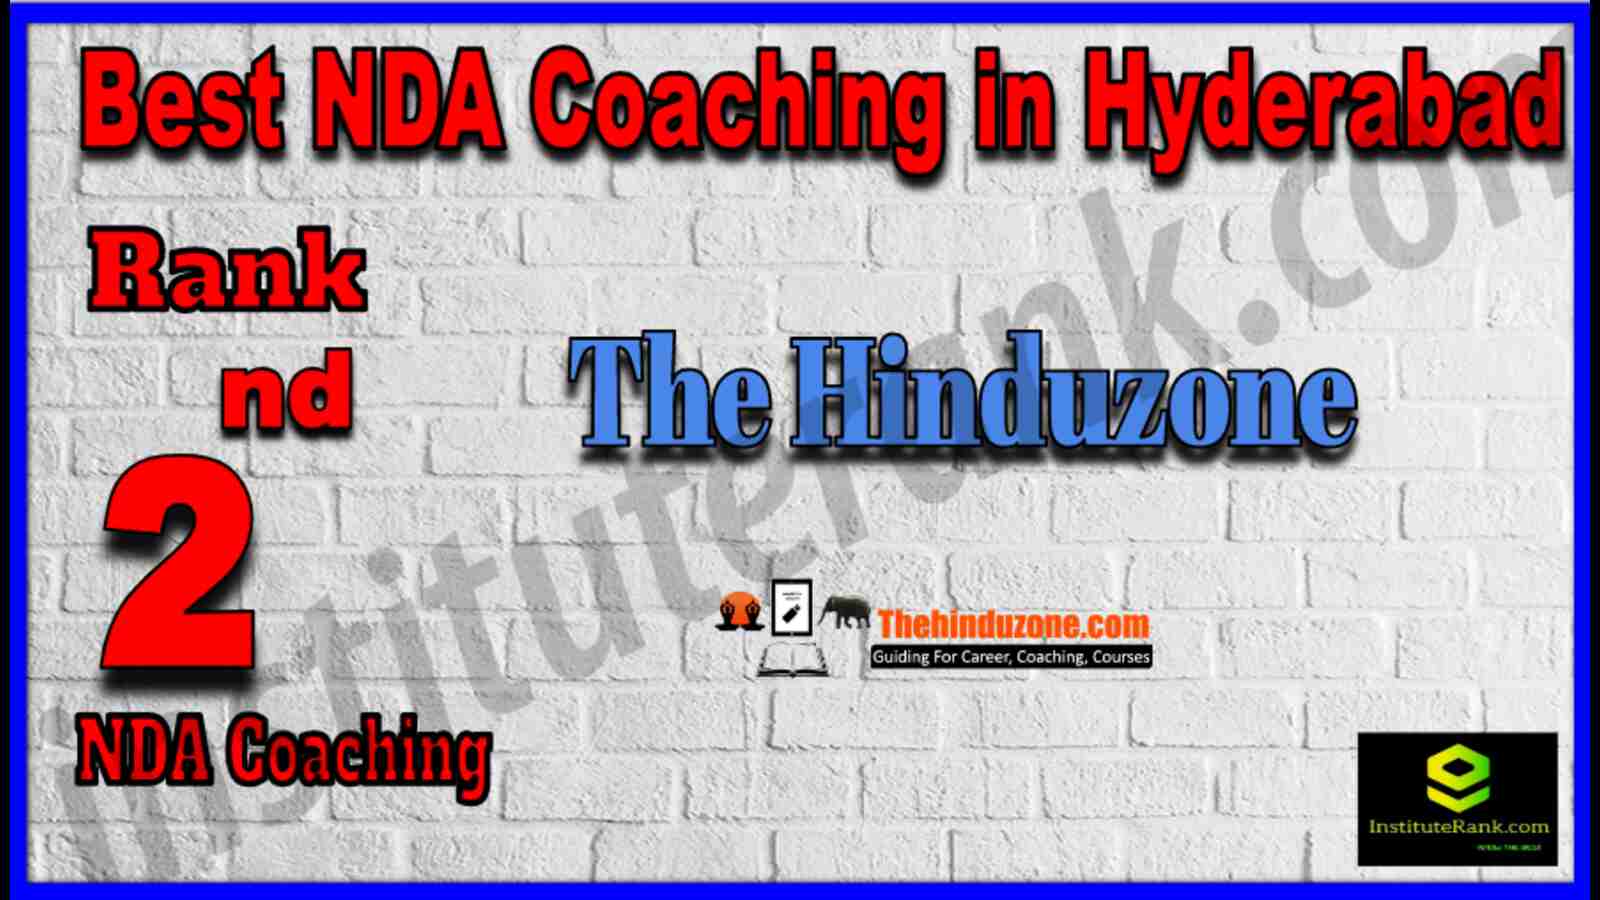 Rank 2 Best NDA Coaching In Hyderabad